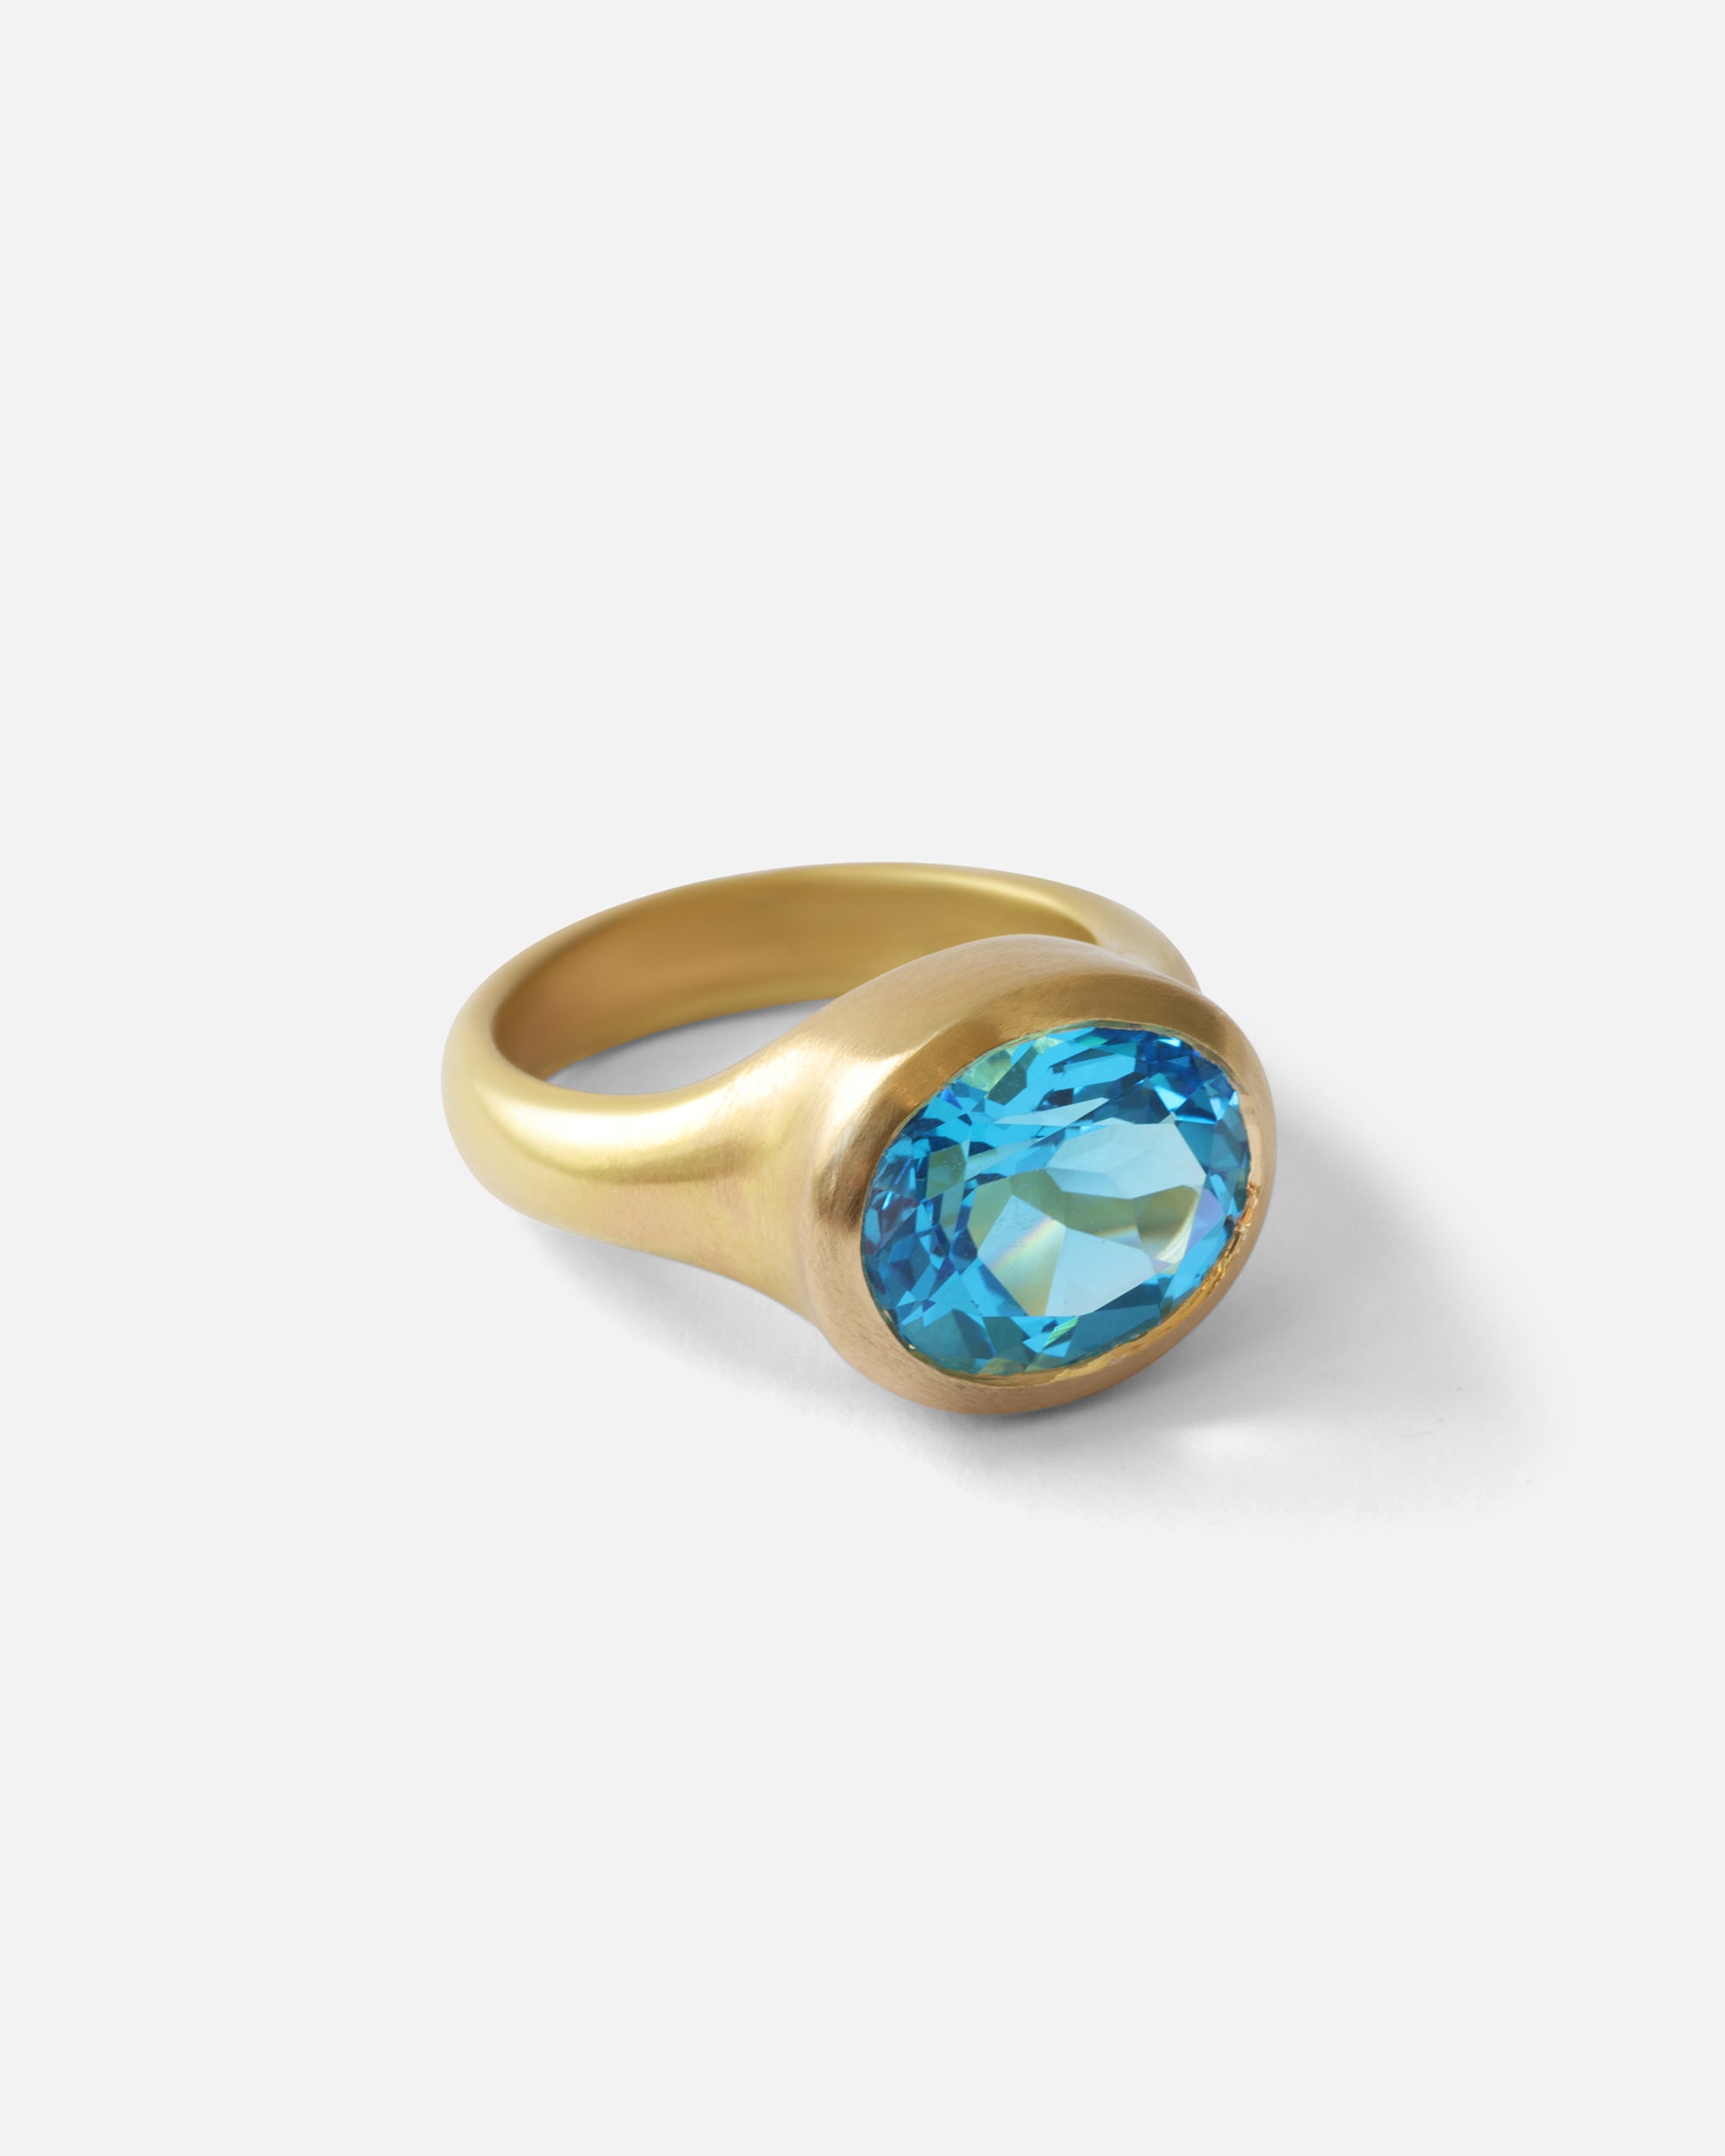 Swiss Blue Topaz Ring By Bree Altman